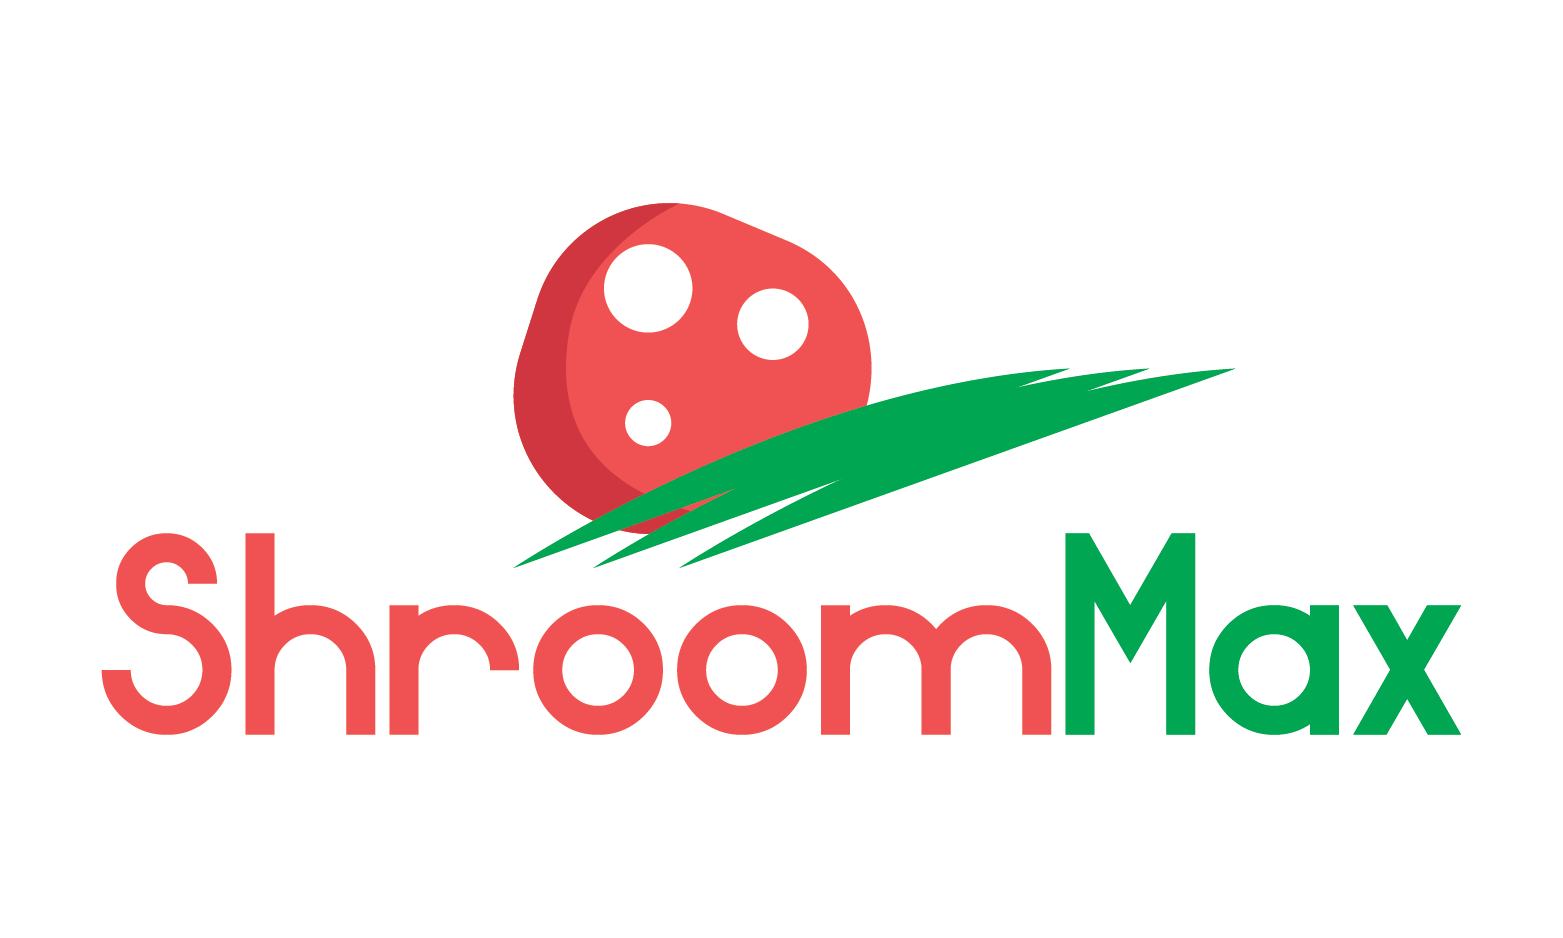 ShroomMax.com - Creative brandable domain for sale